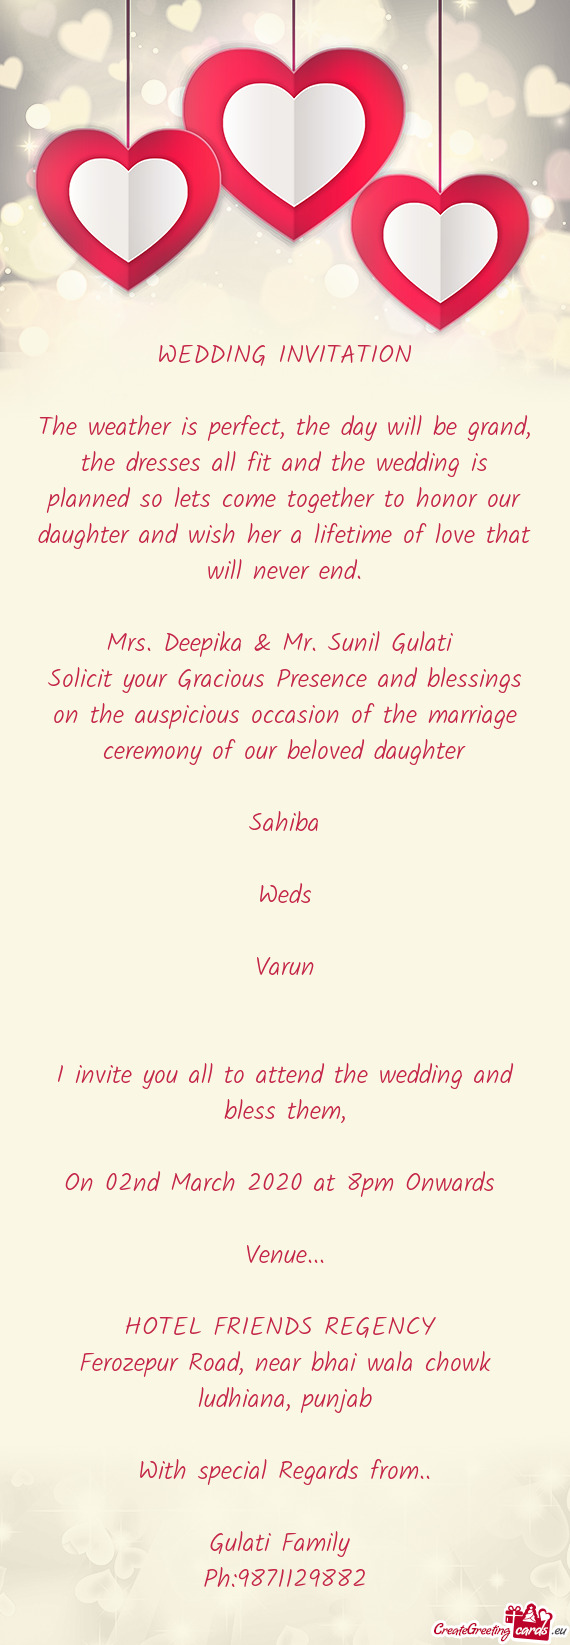 Mrs. Deepika & Mr. Sunil Gulati